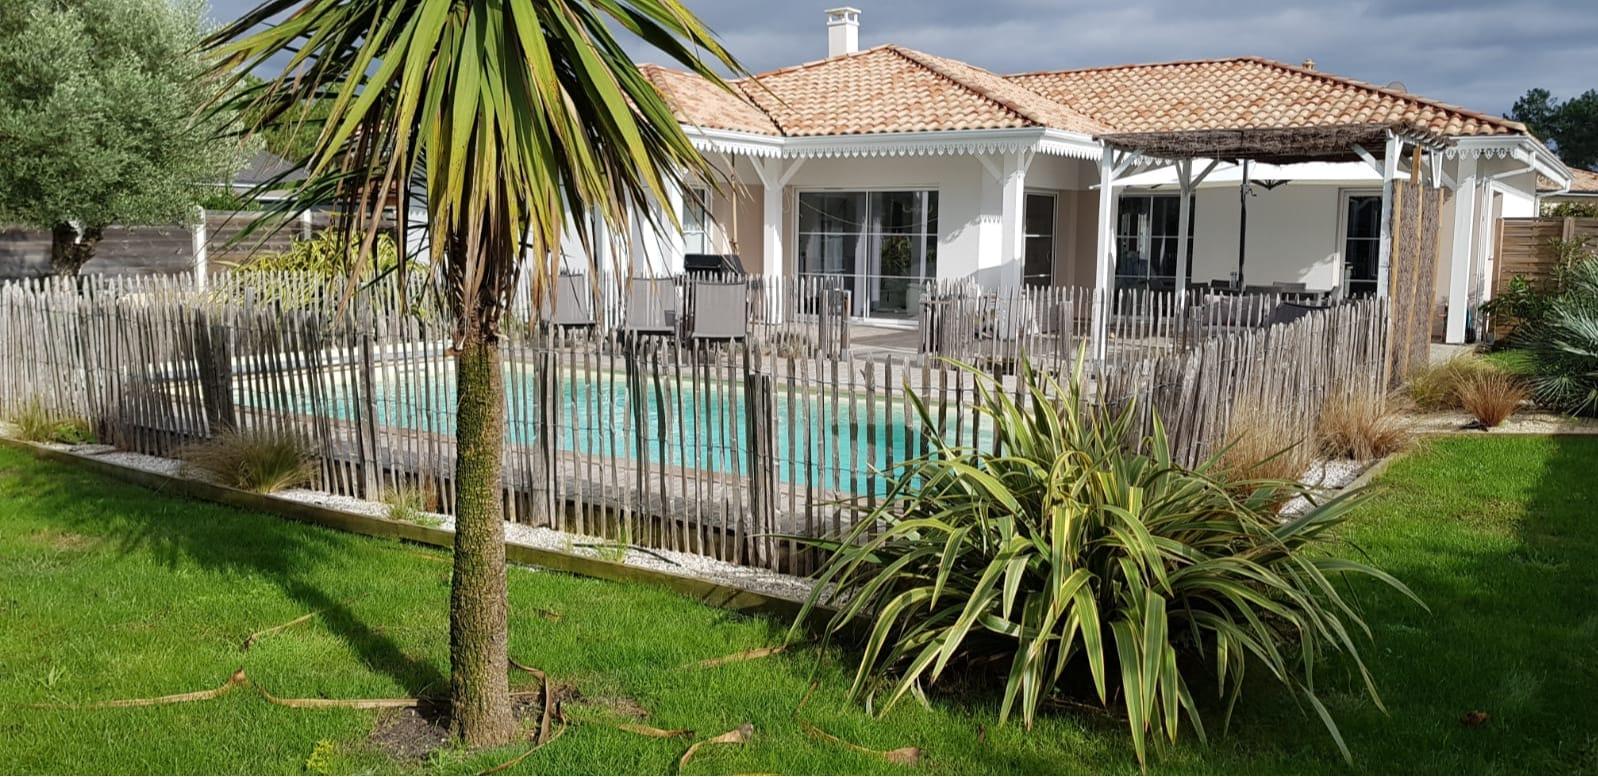 Maison avec piscine, terrasse couverte et jardin